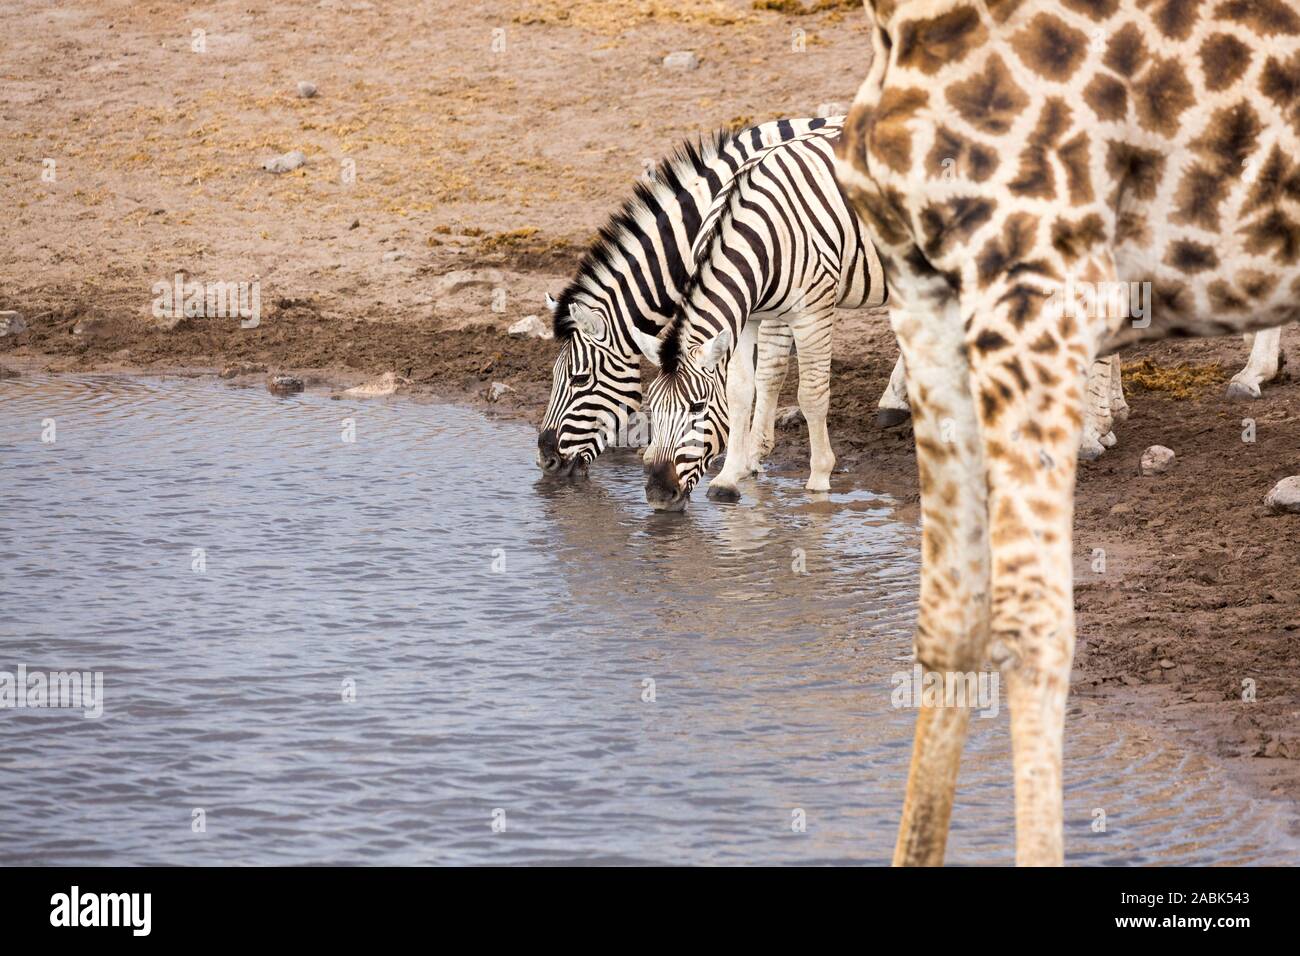 Two zebras standing next to a giraffe, drinking at a waterhole, Etosha, Namibia, Africa Stock Photo